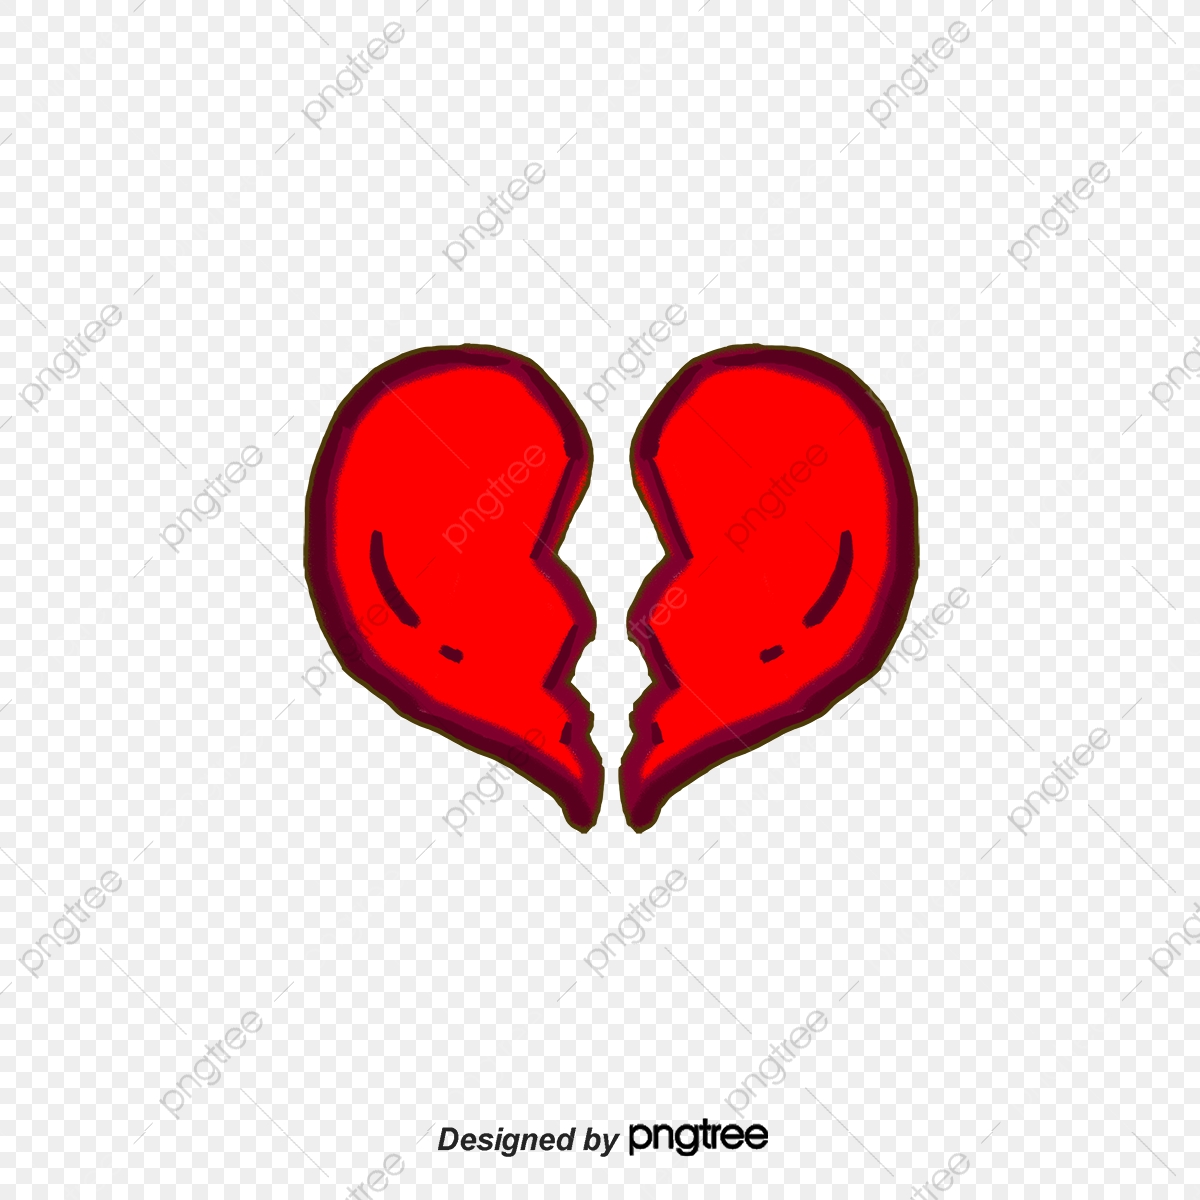 Heartbreak, Sad, Cartoon PNG Transparent Clipart Image and PSD File.